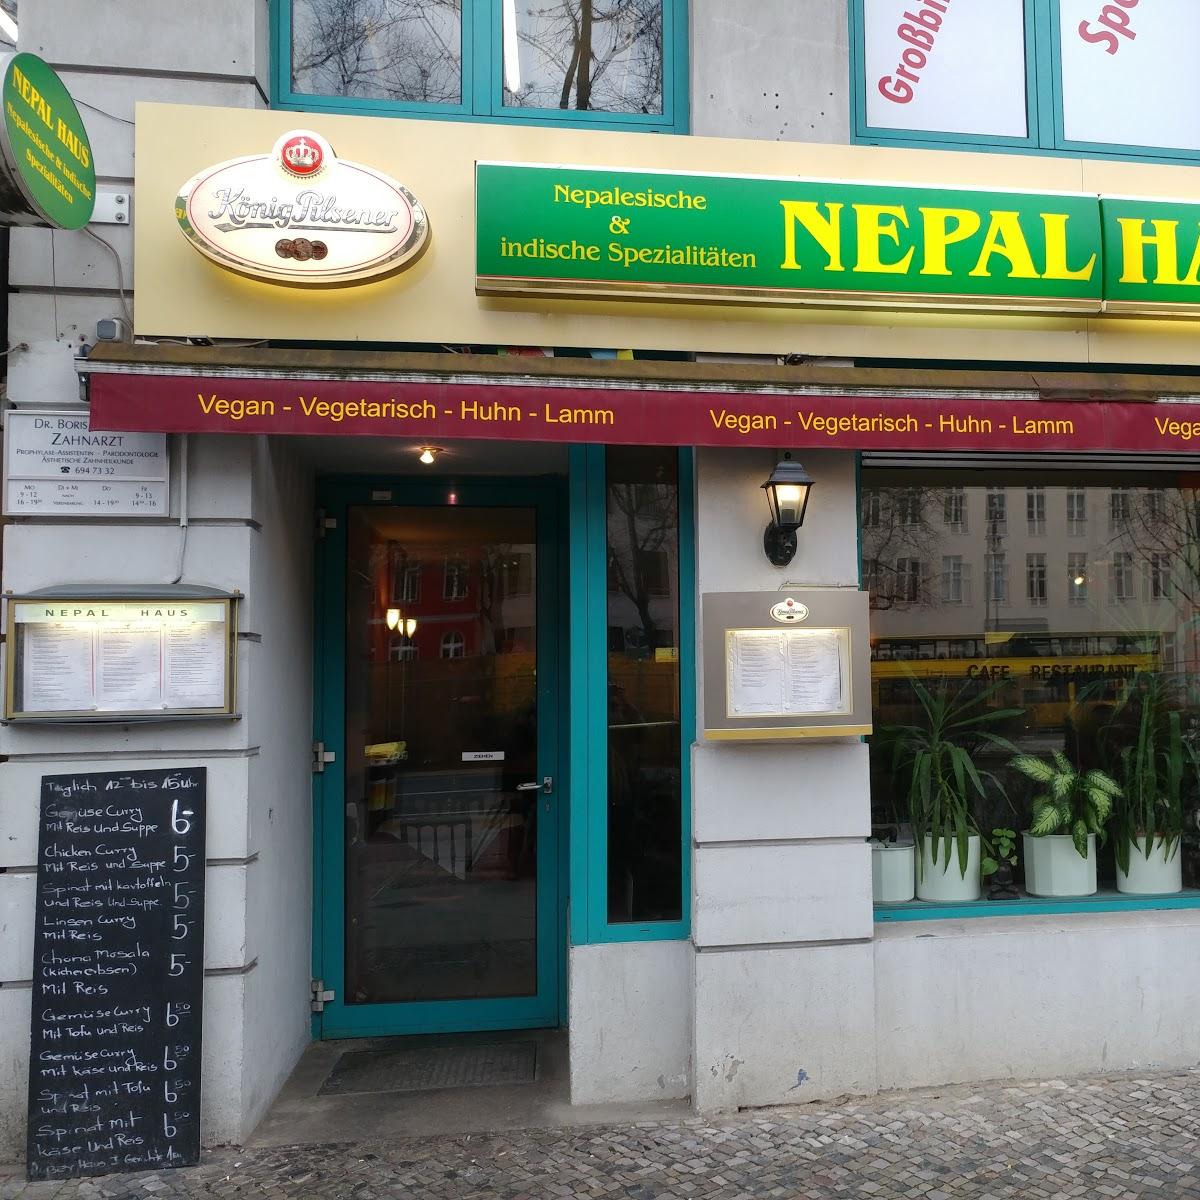 Restaurant "Nepal Haus" in Berlin